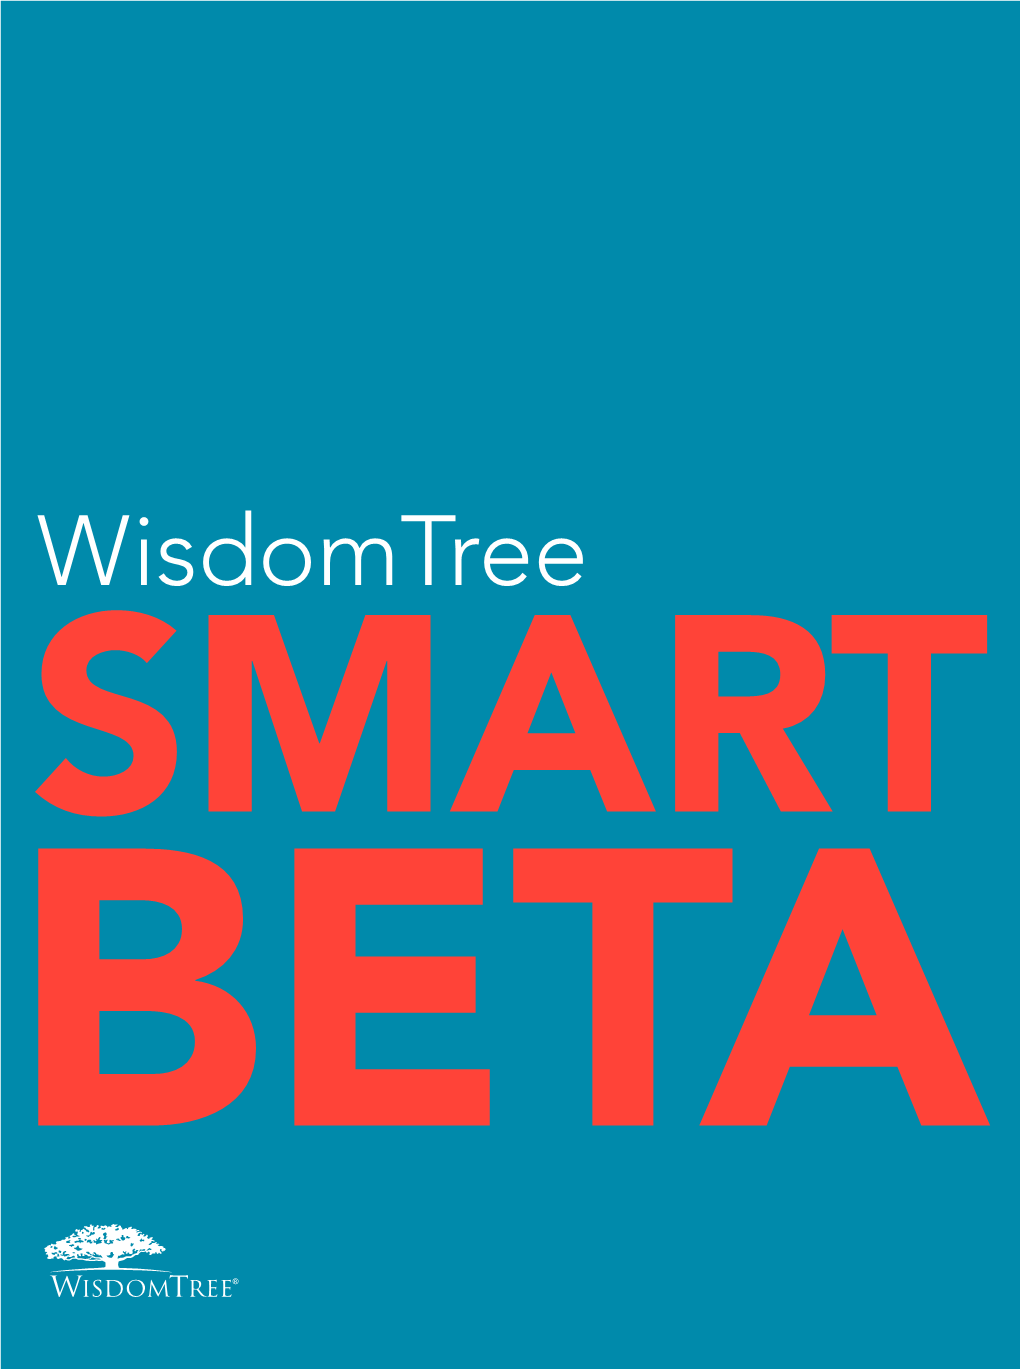 Wisdomtree SMART BETA WISDOMTREE and SMART Wisdomtree and SMART BETA